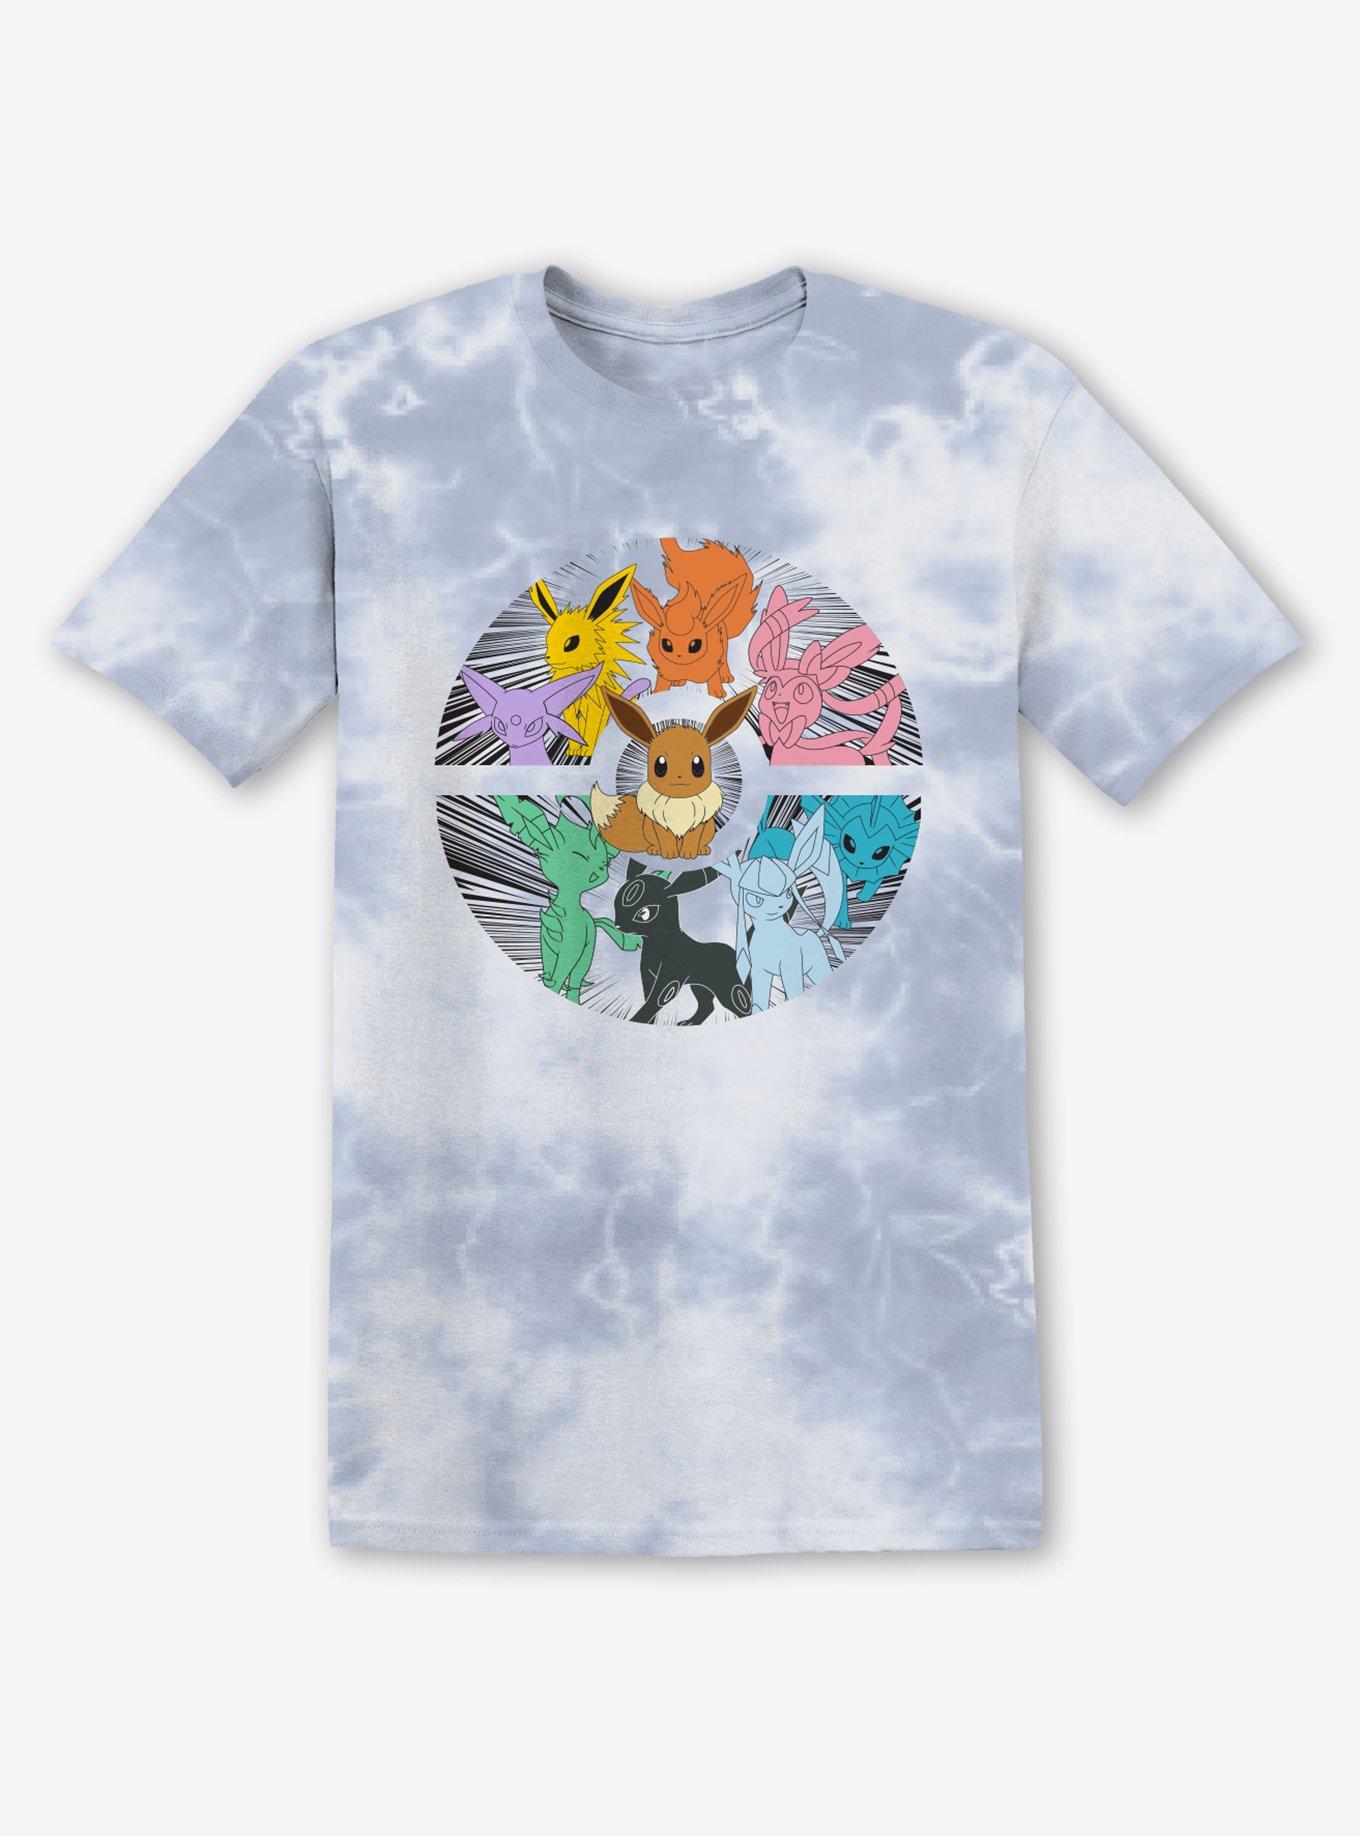 Eeveelutions Shirt - Pokemon inspired